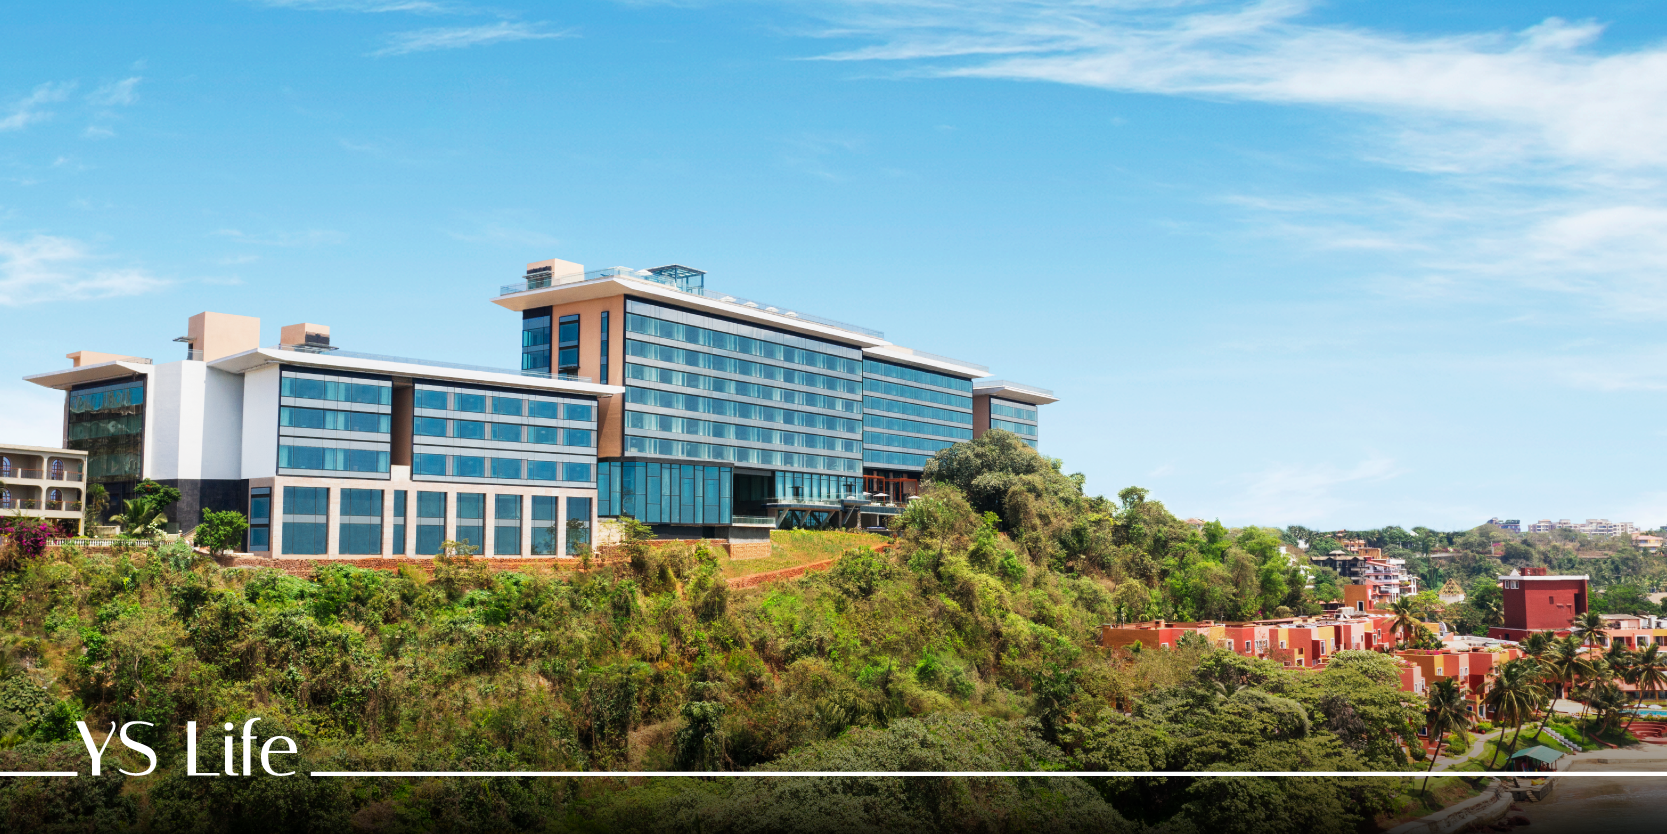 Taj Resort and Convention Centre, Goa: A hillside beach resort in the lap of luxury